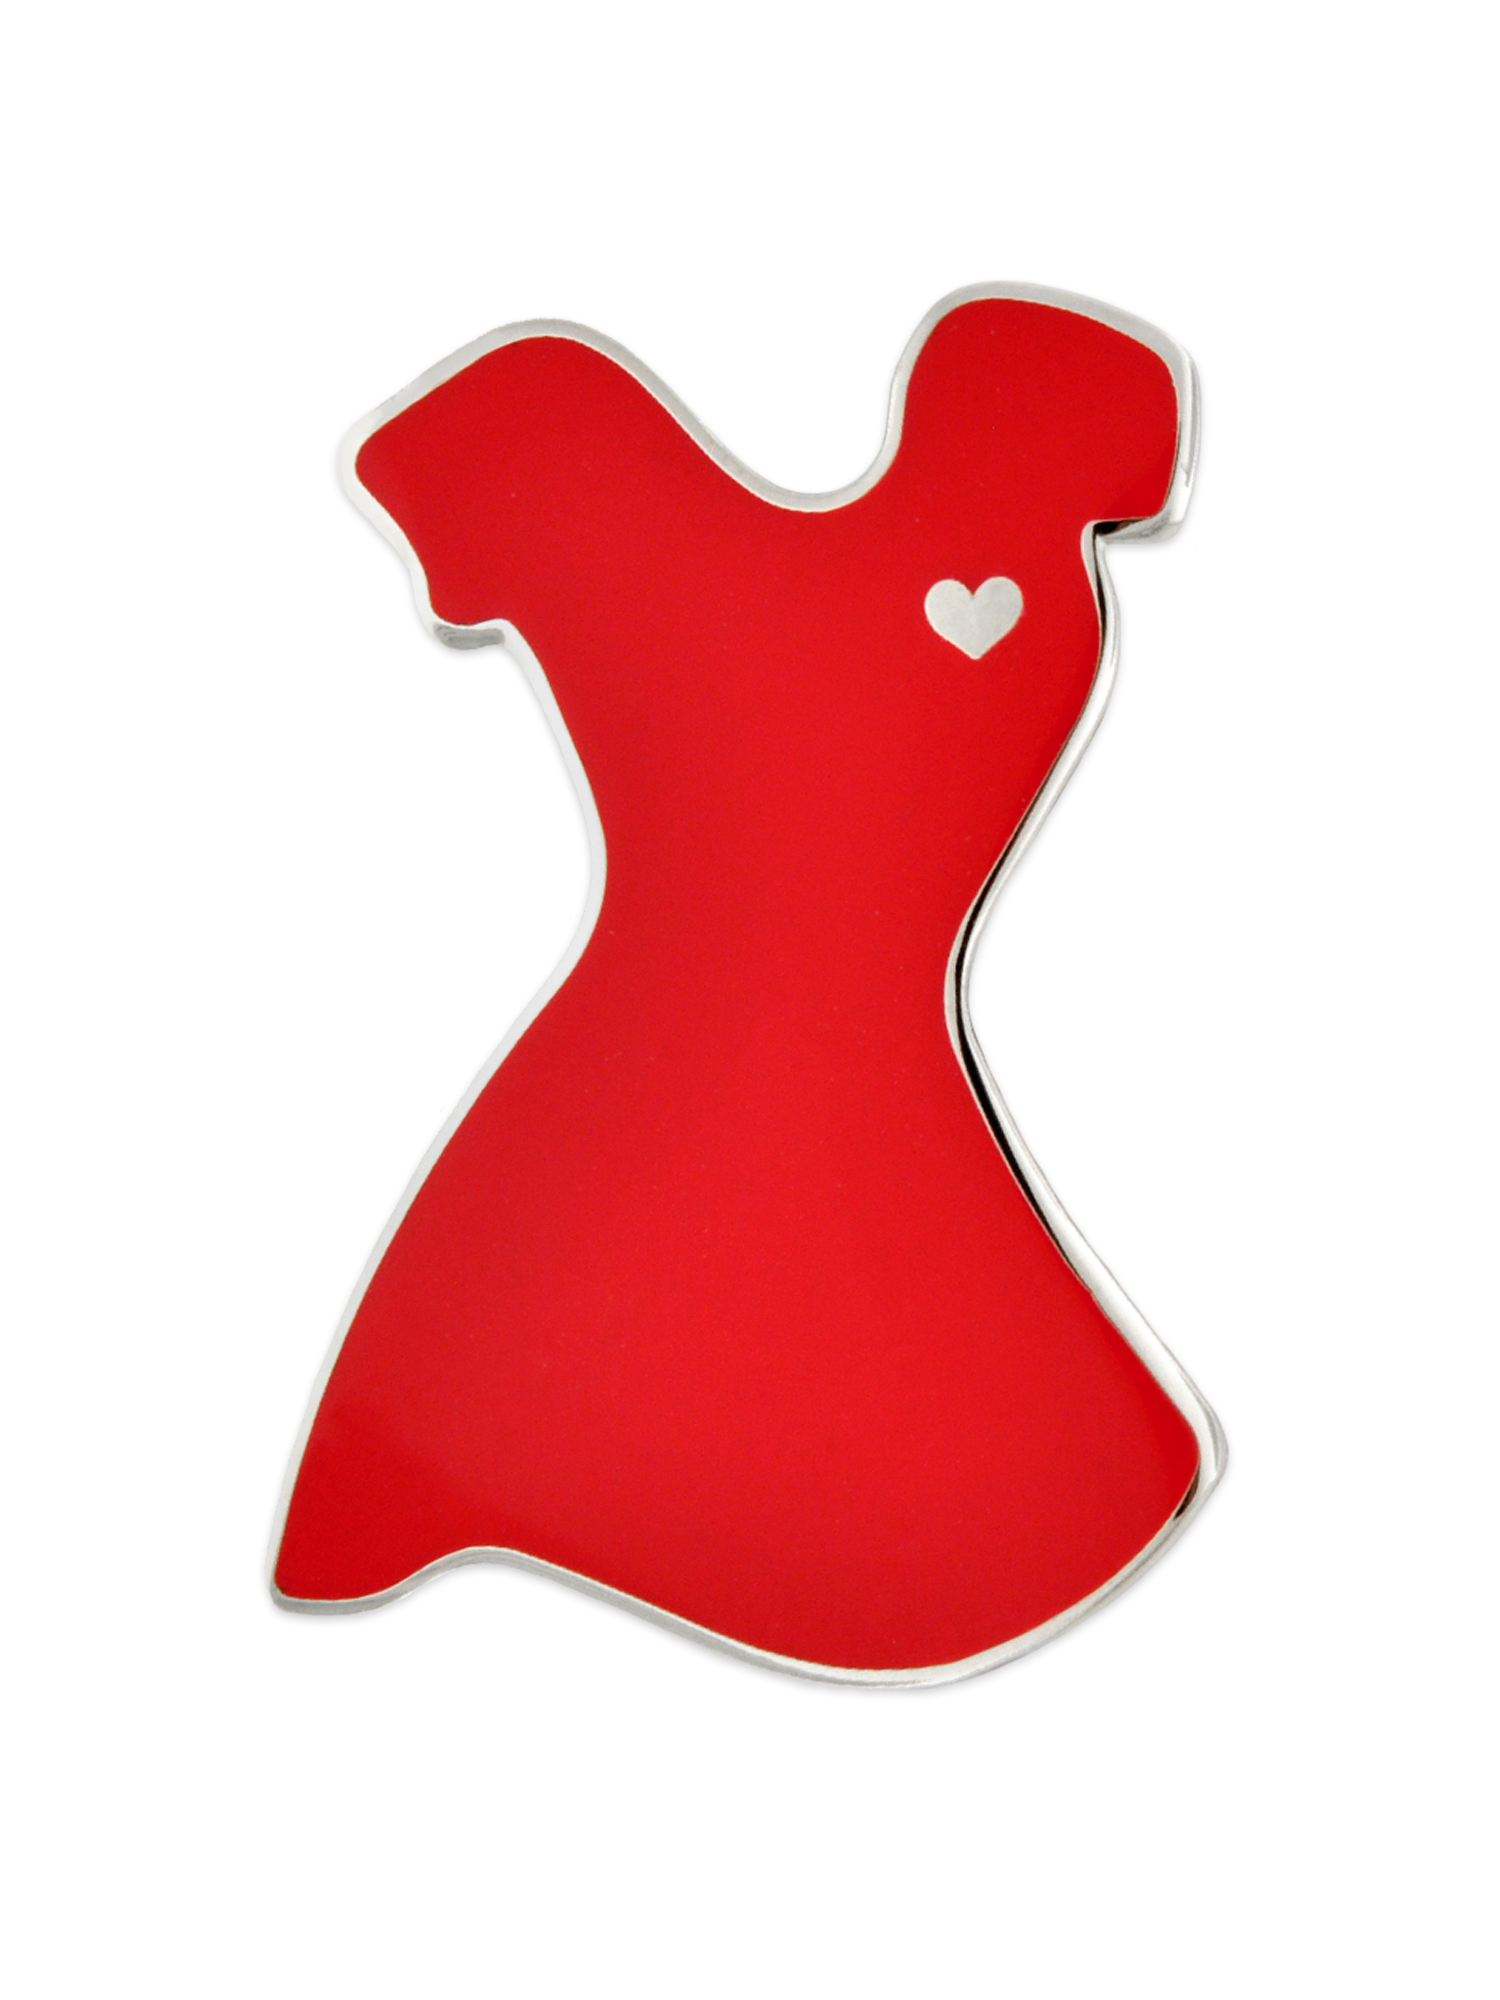 PinMart Red Dress American Heart Month Enamel Lapel Pin